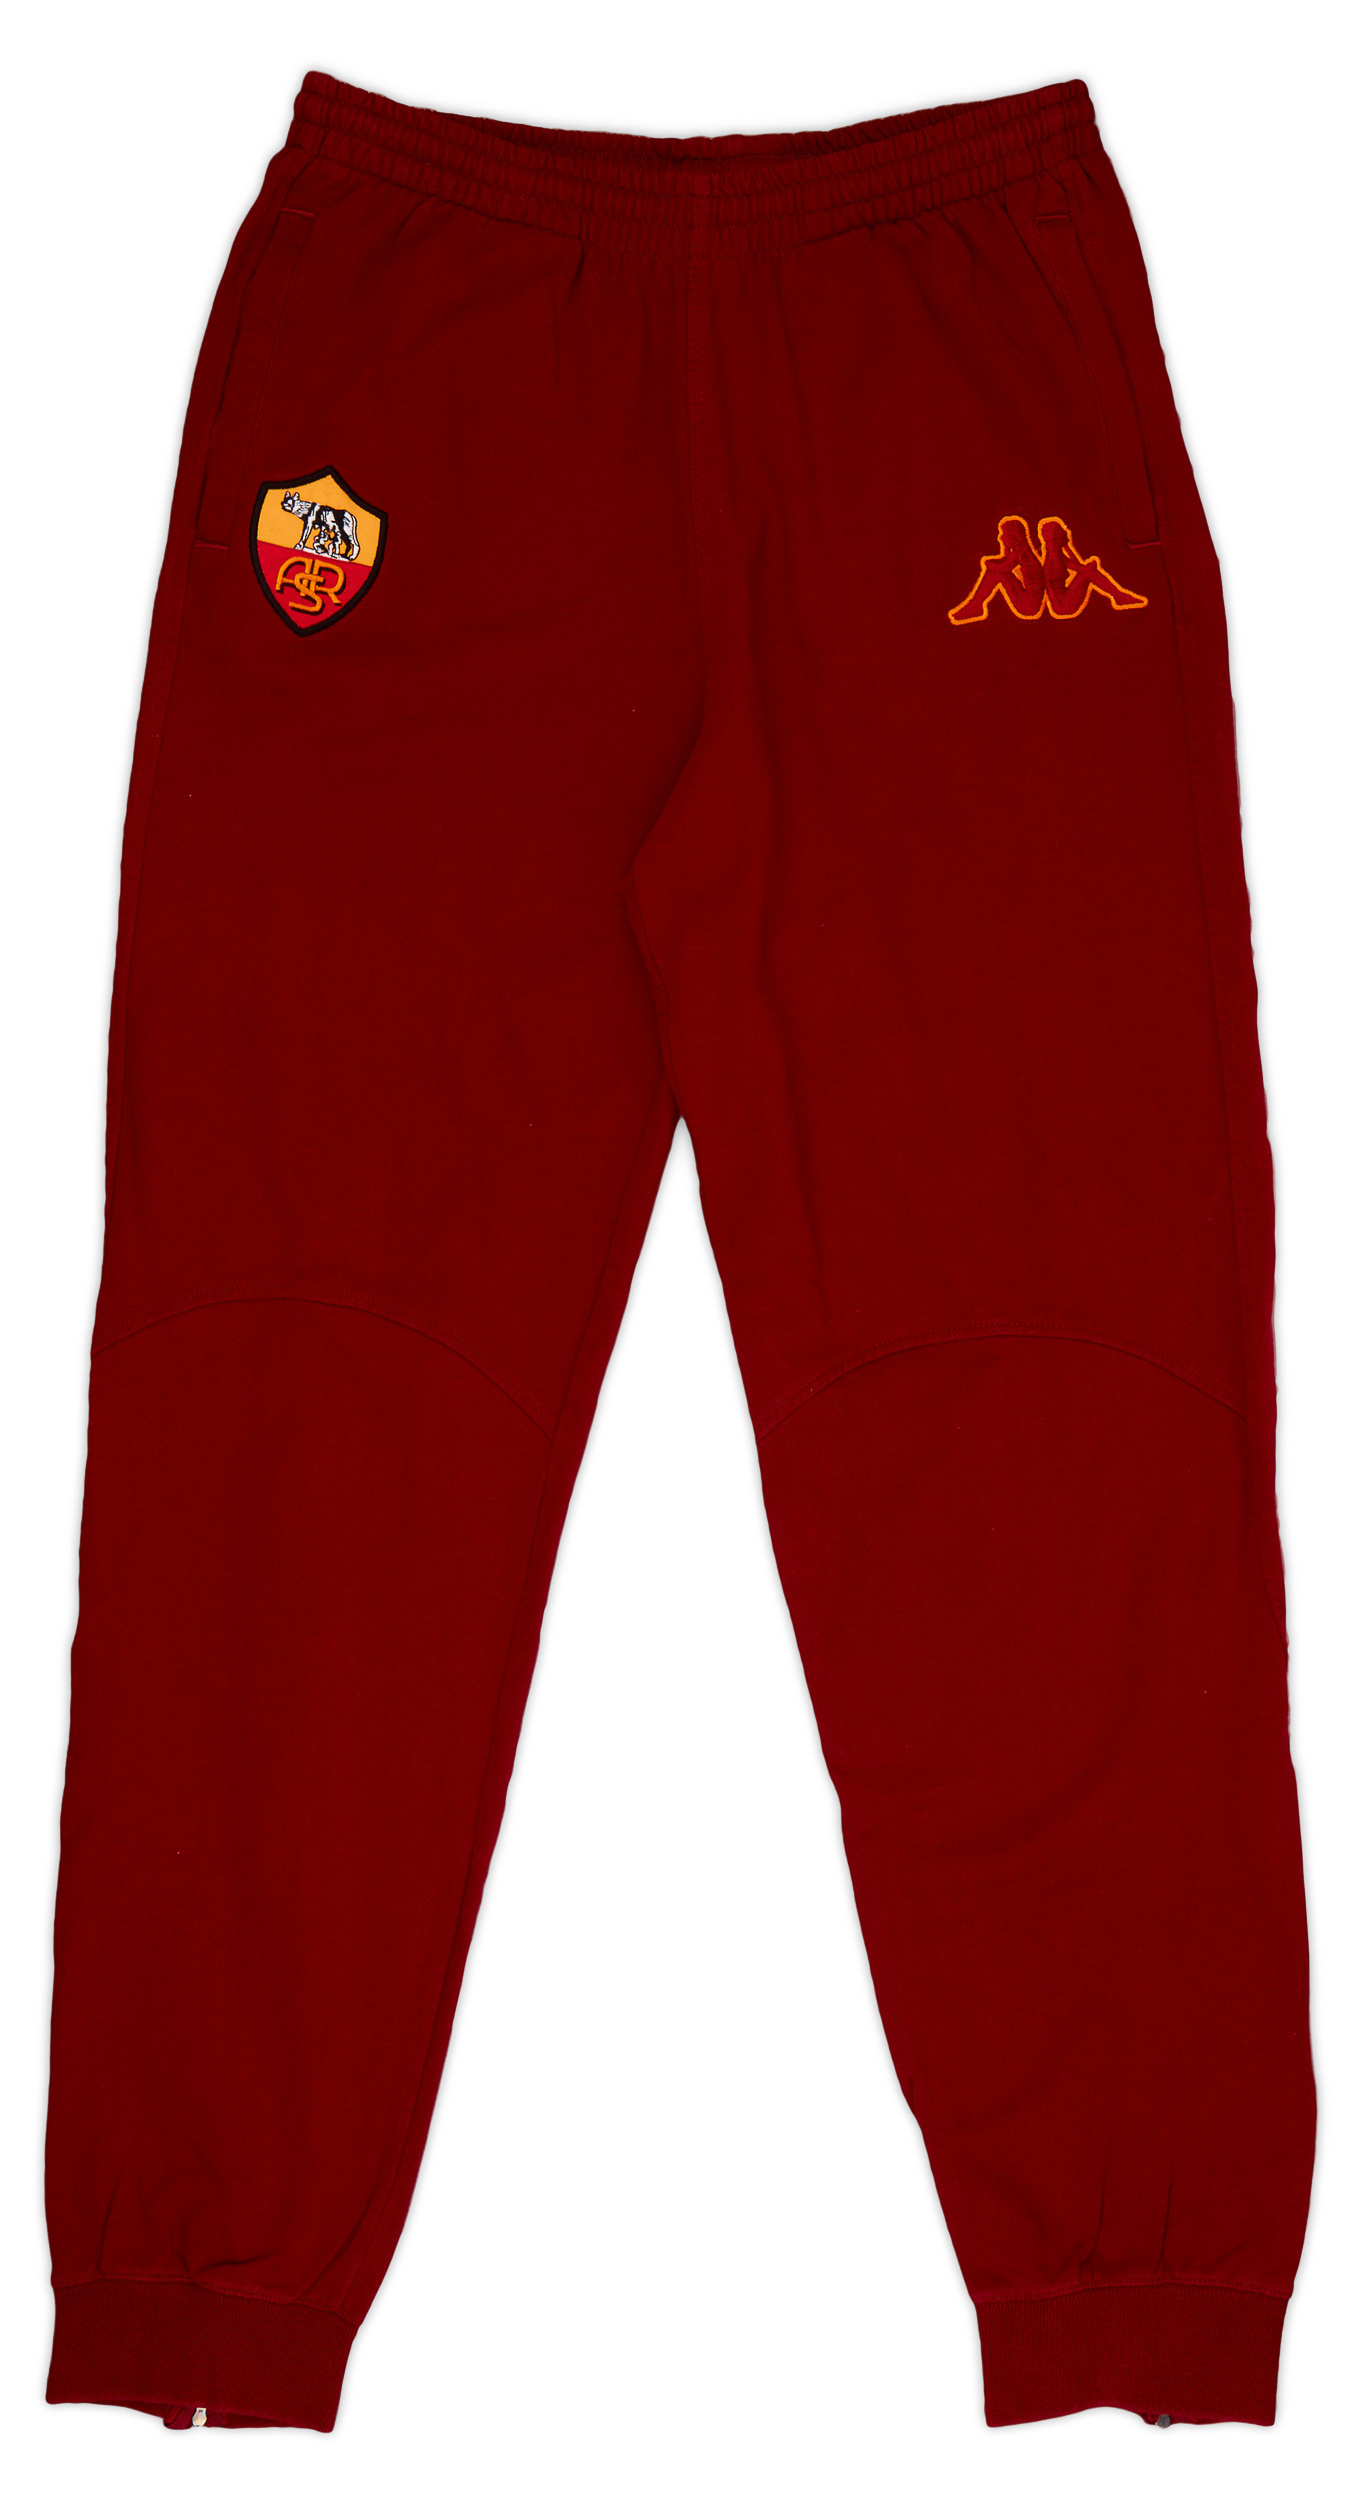 2012-13 Roma Kappa Training Pants/Bottoms - As New